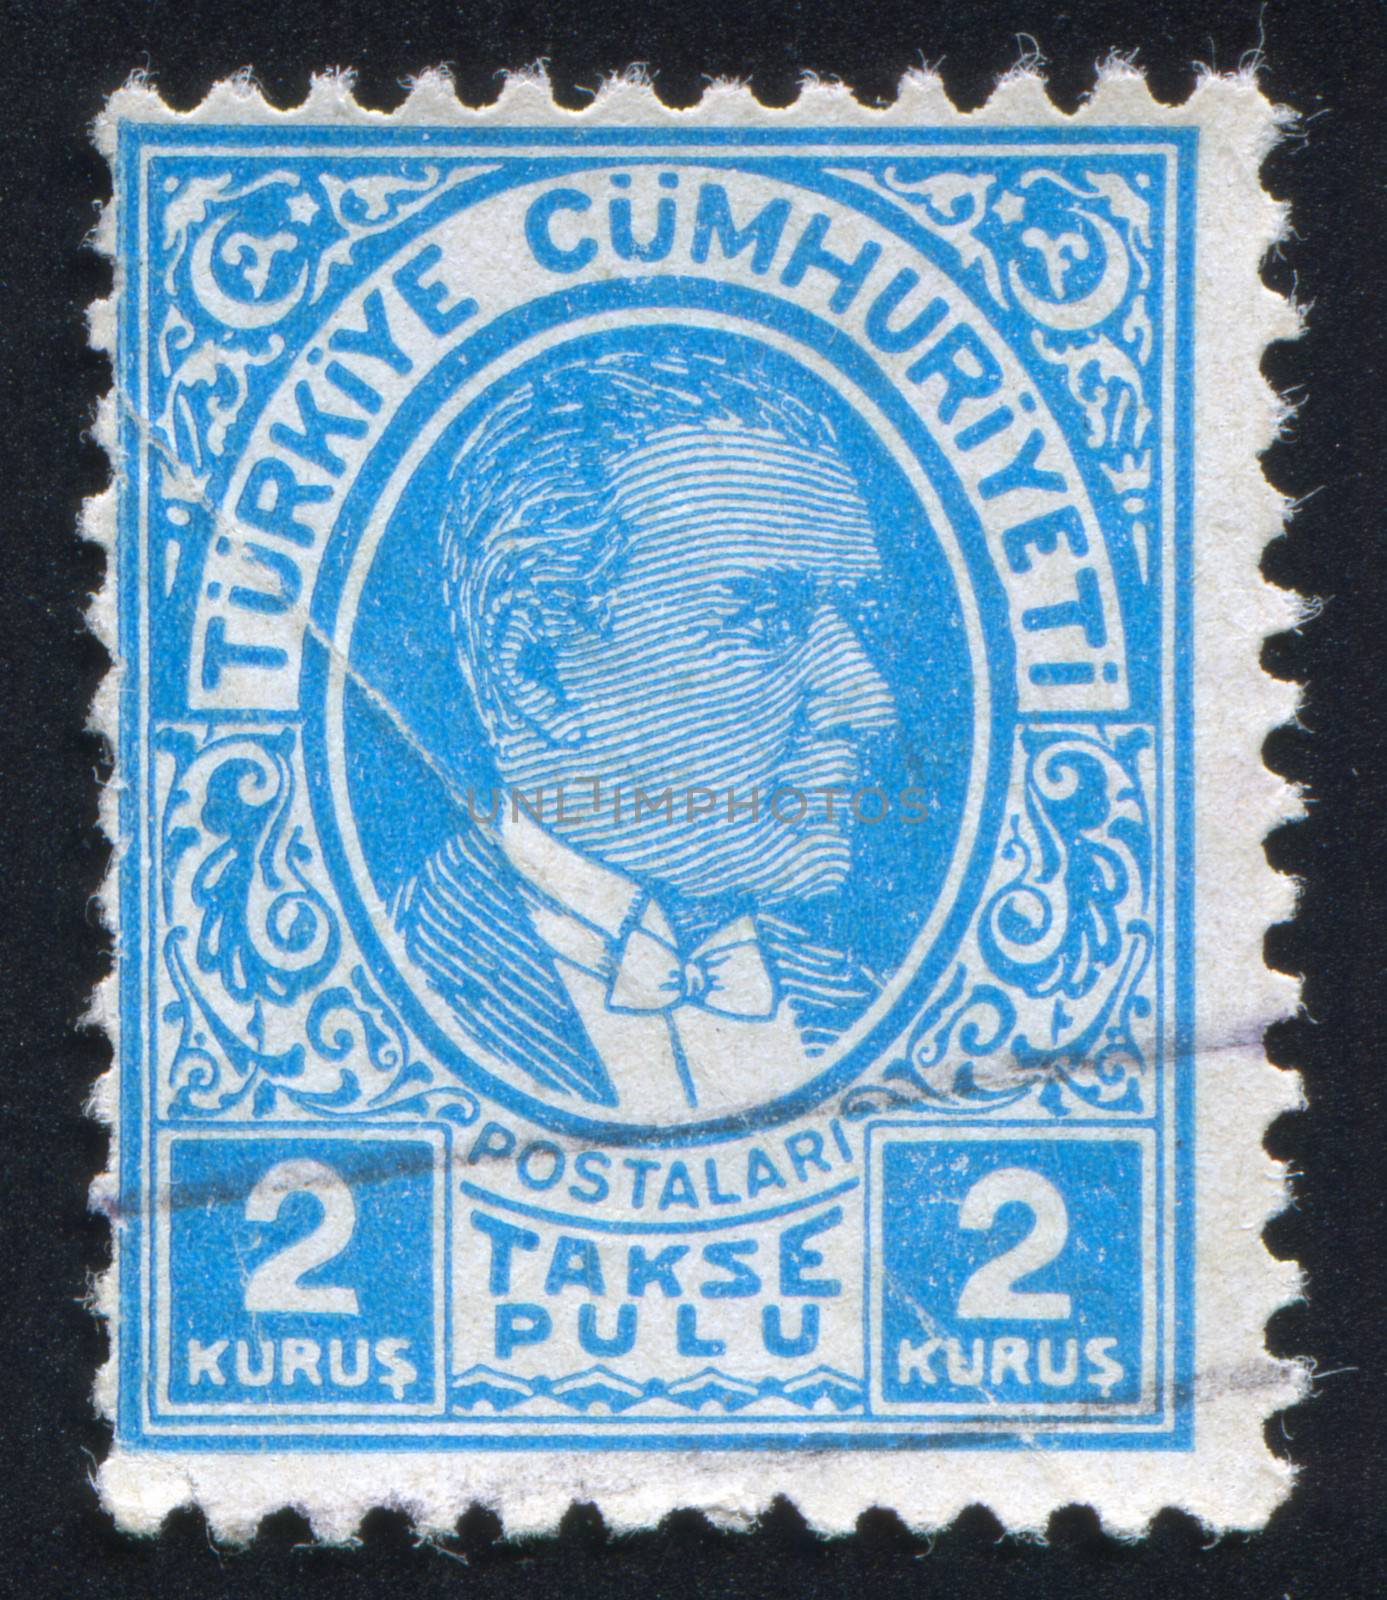 TURKEY - CIRCA 1936: stamp printed by Turkey, shows president Kemal Ataturk, circa 1936.